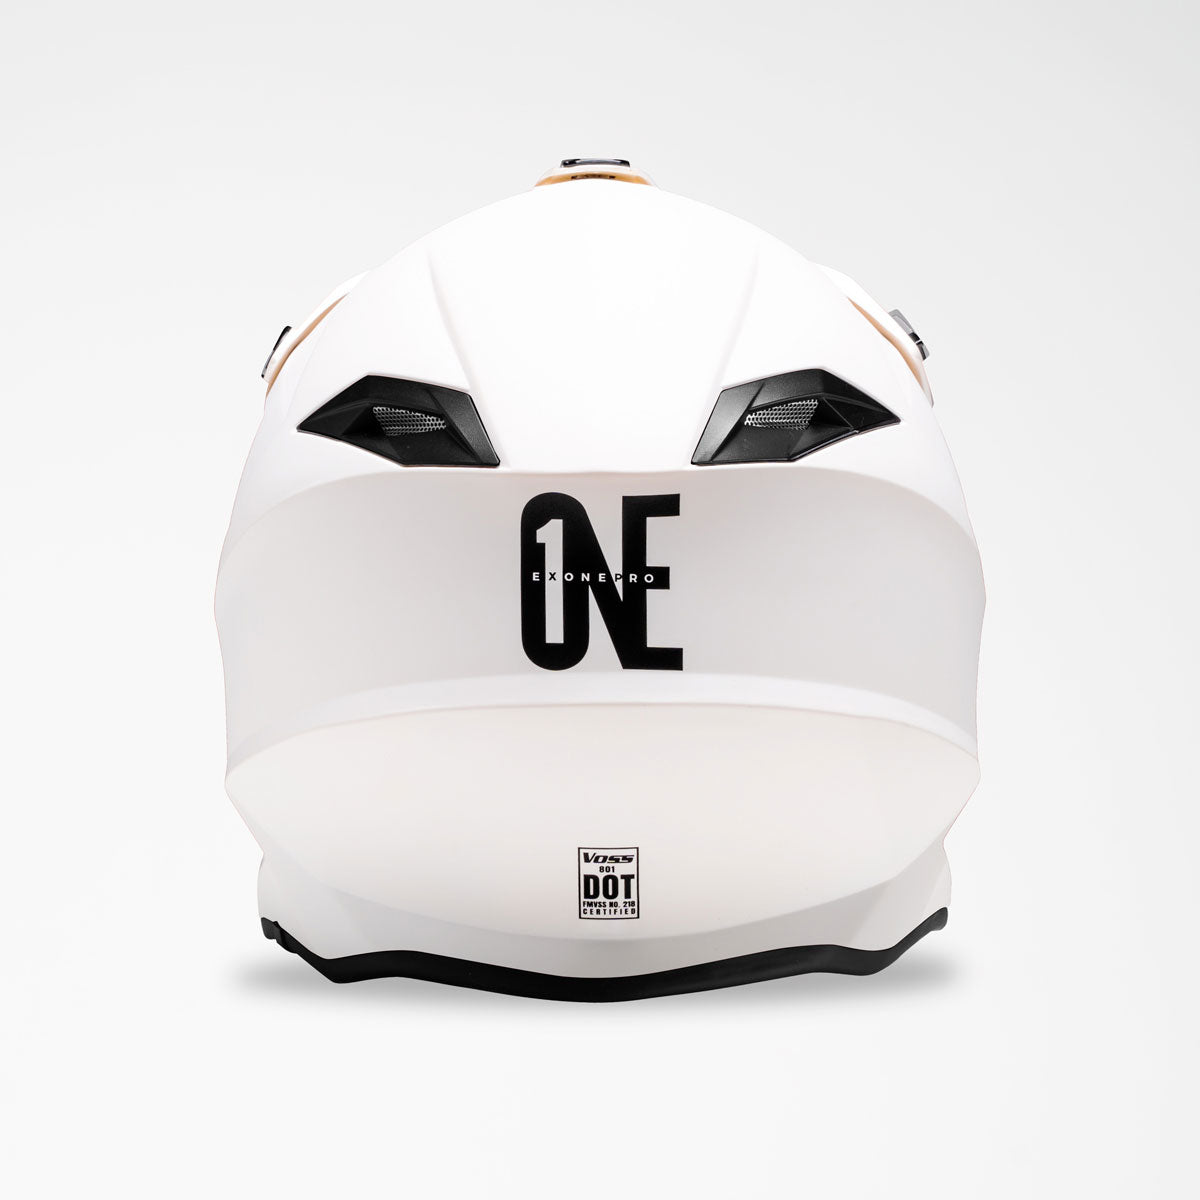 Voss 801 X1 Pro Dirt Whiteout Helmet